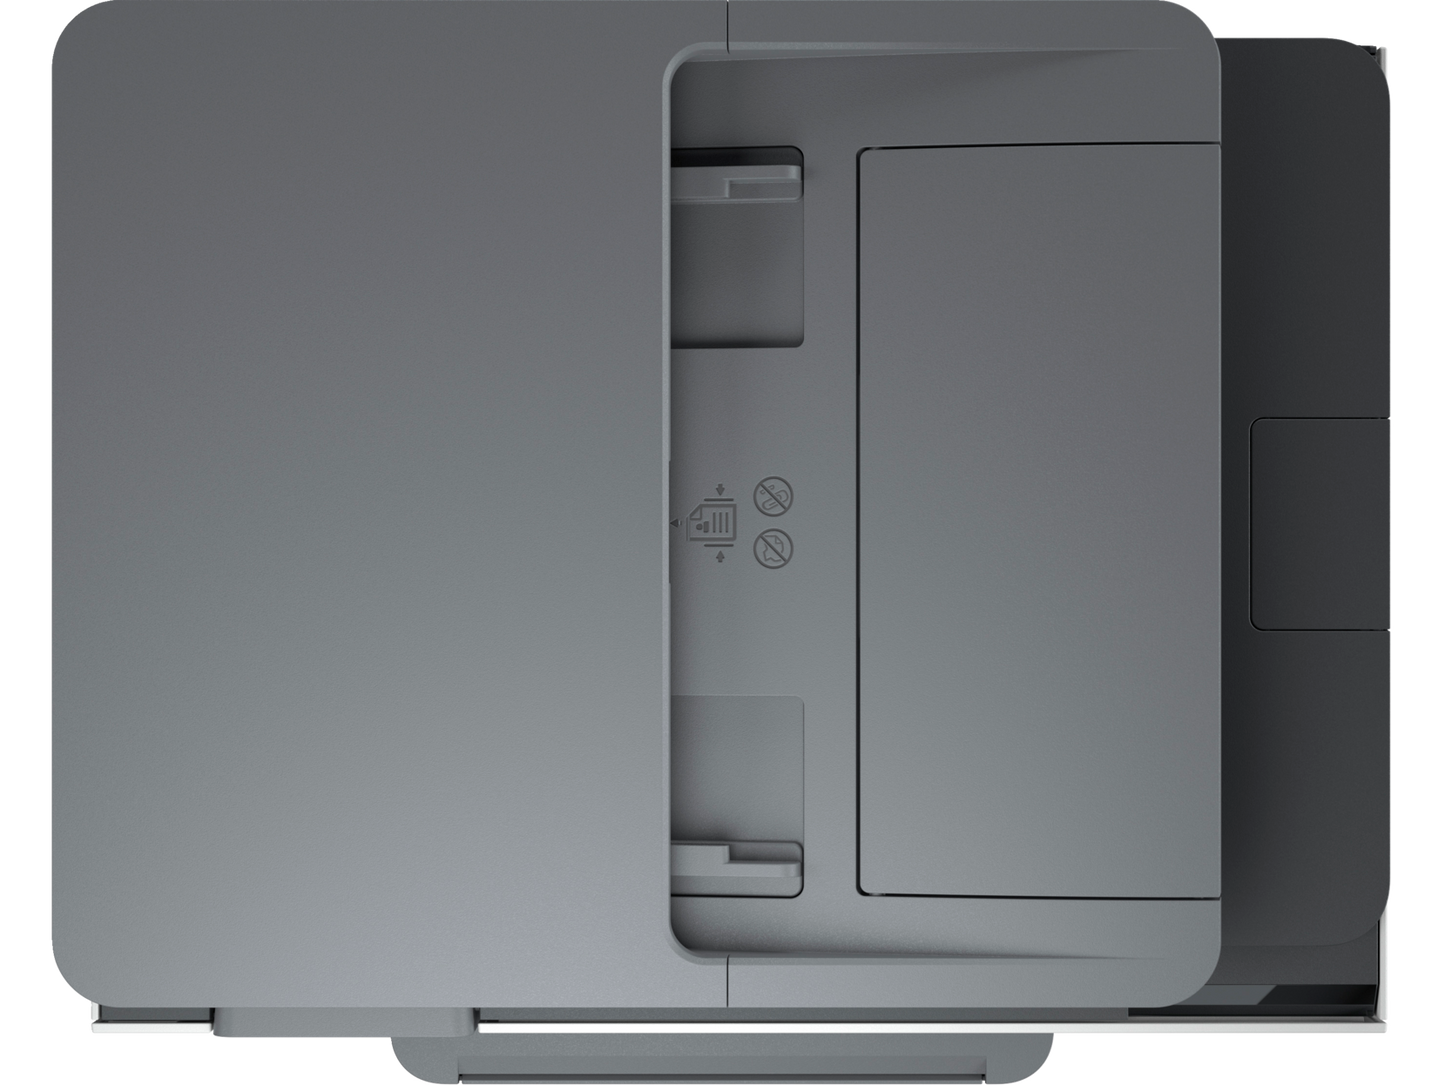 HP OfficeJet Pro 9015e All-in-One Inkjet Printer